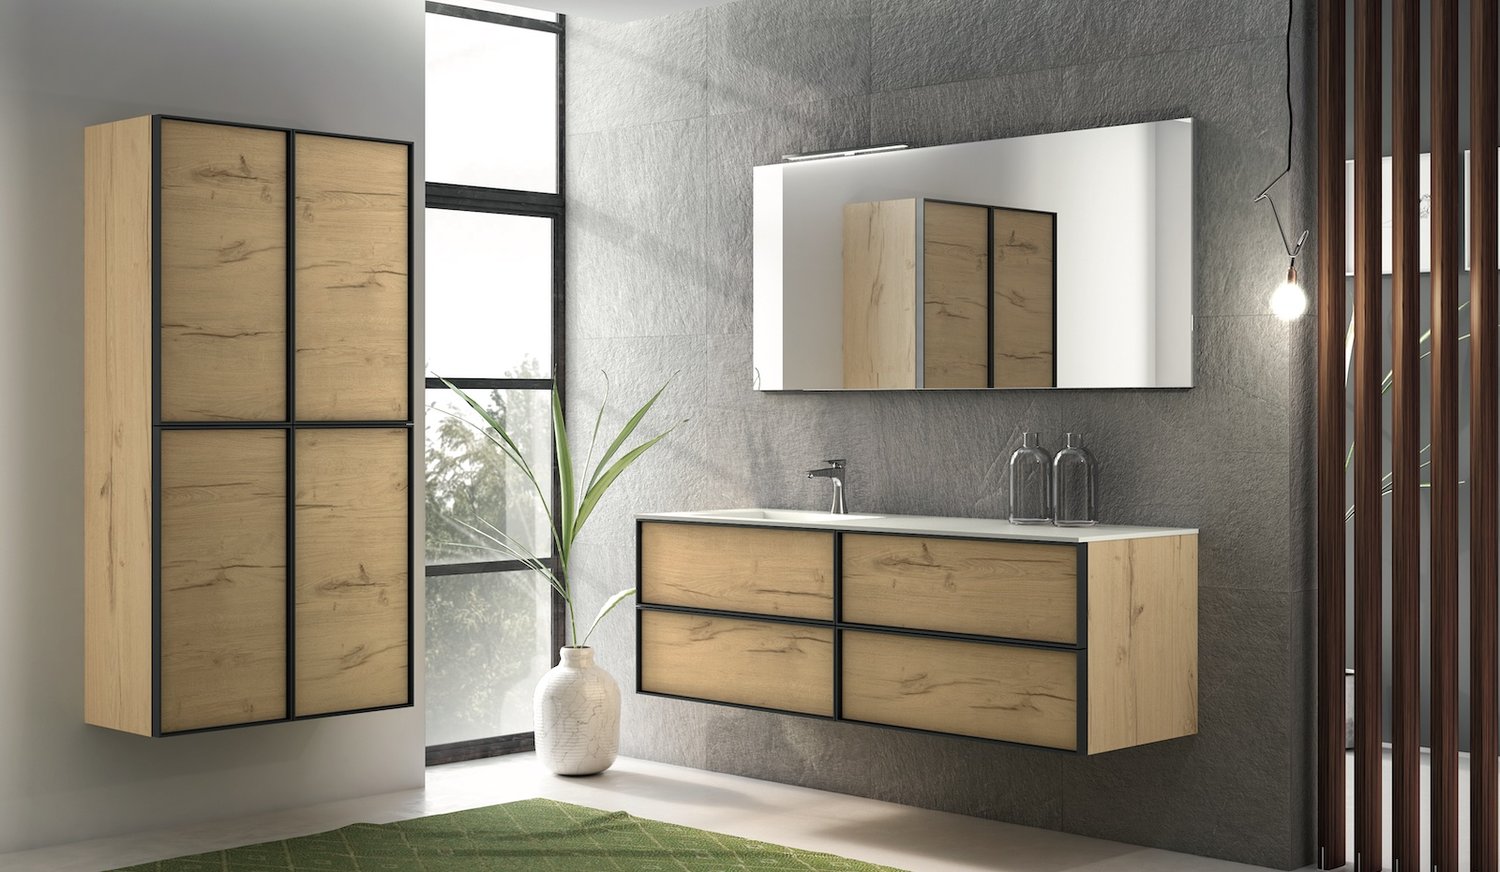 Coordinating wall-mount bathroom storage and vanity in light wood